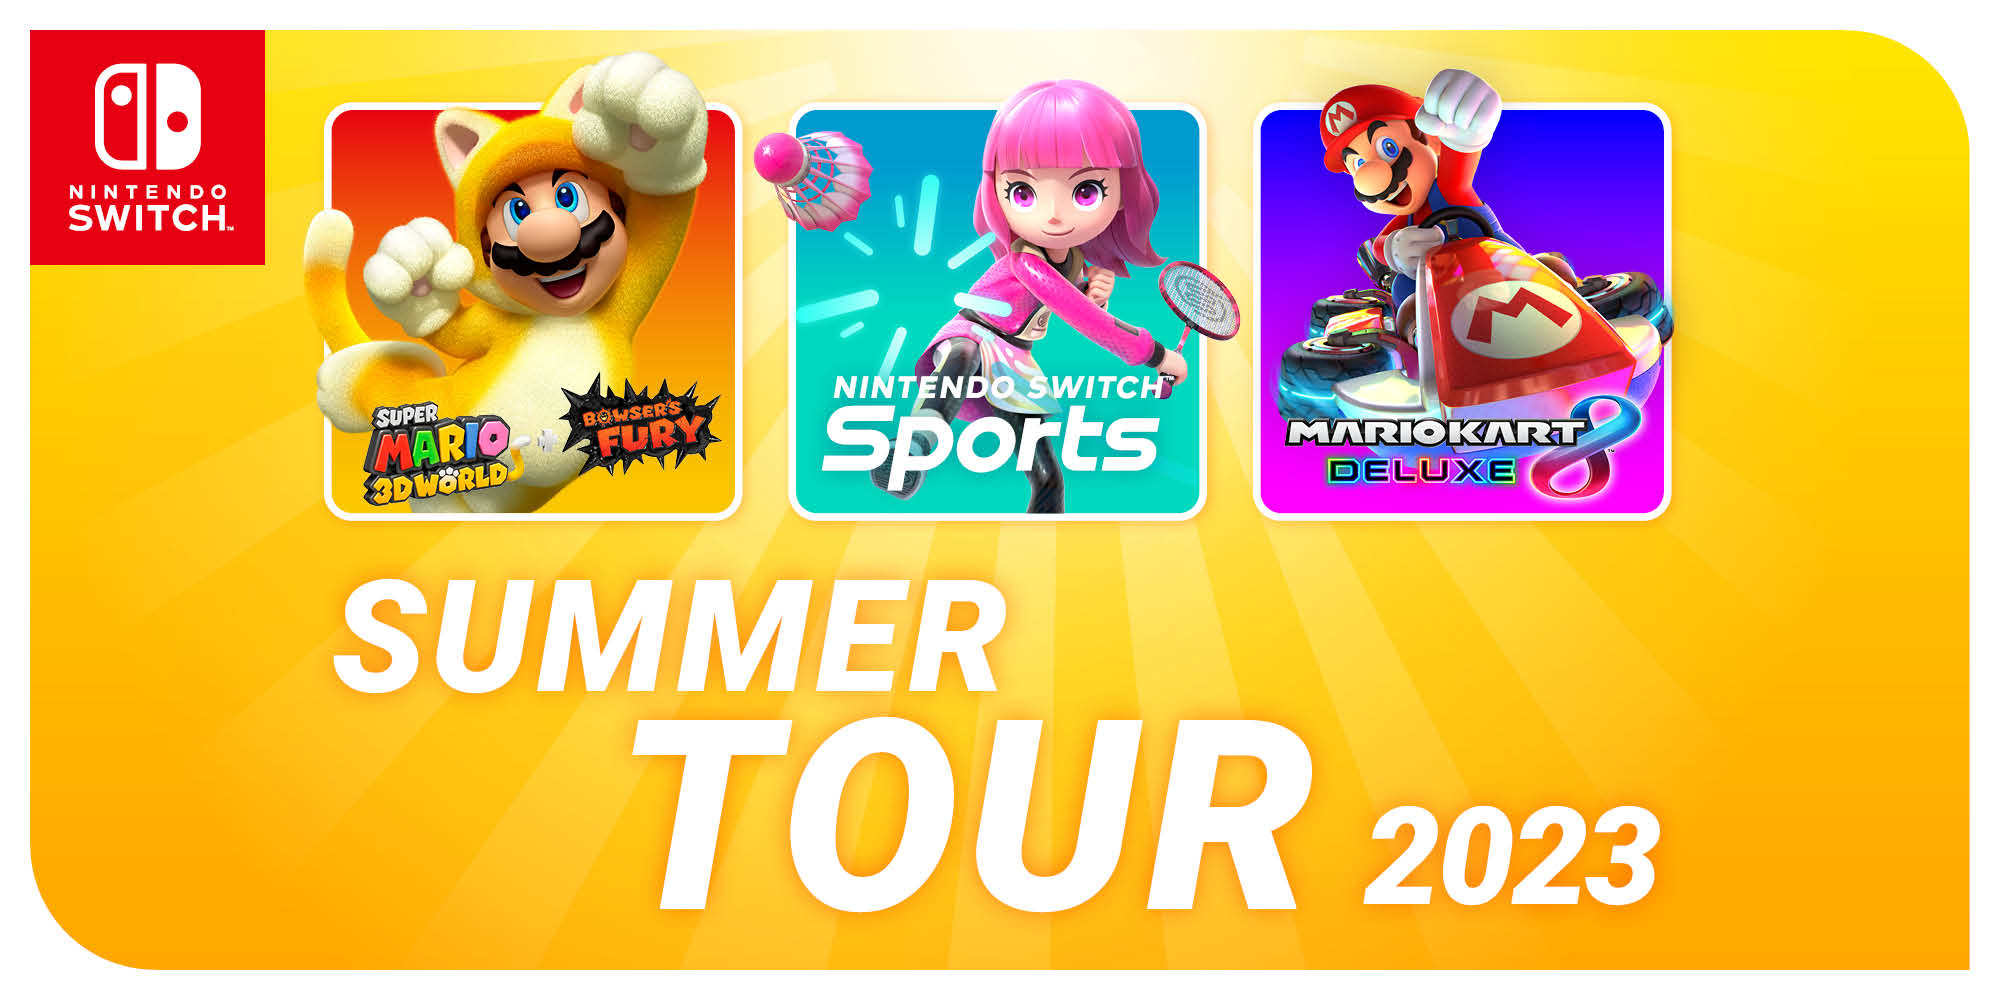 Nintendo Switch Summer Tour 2023